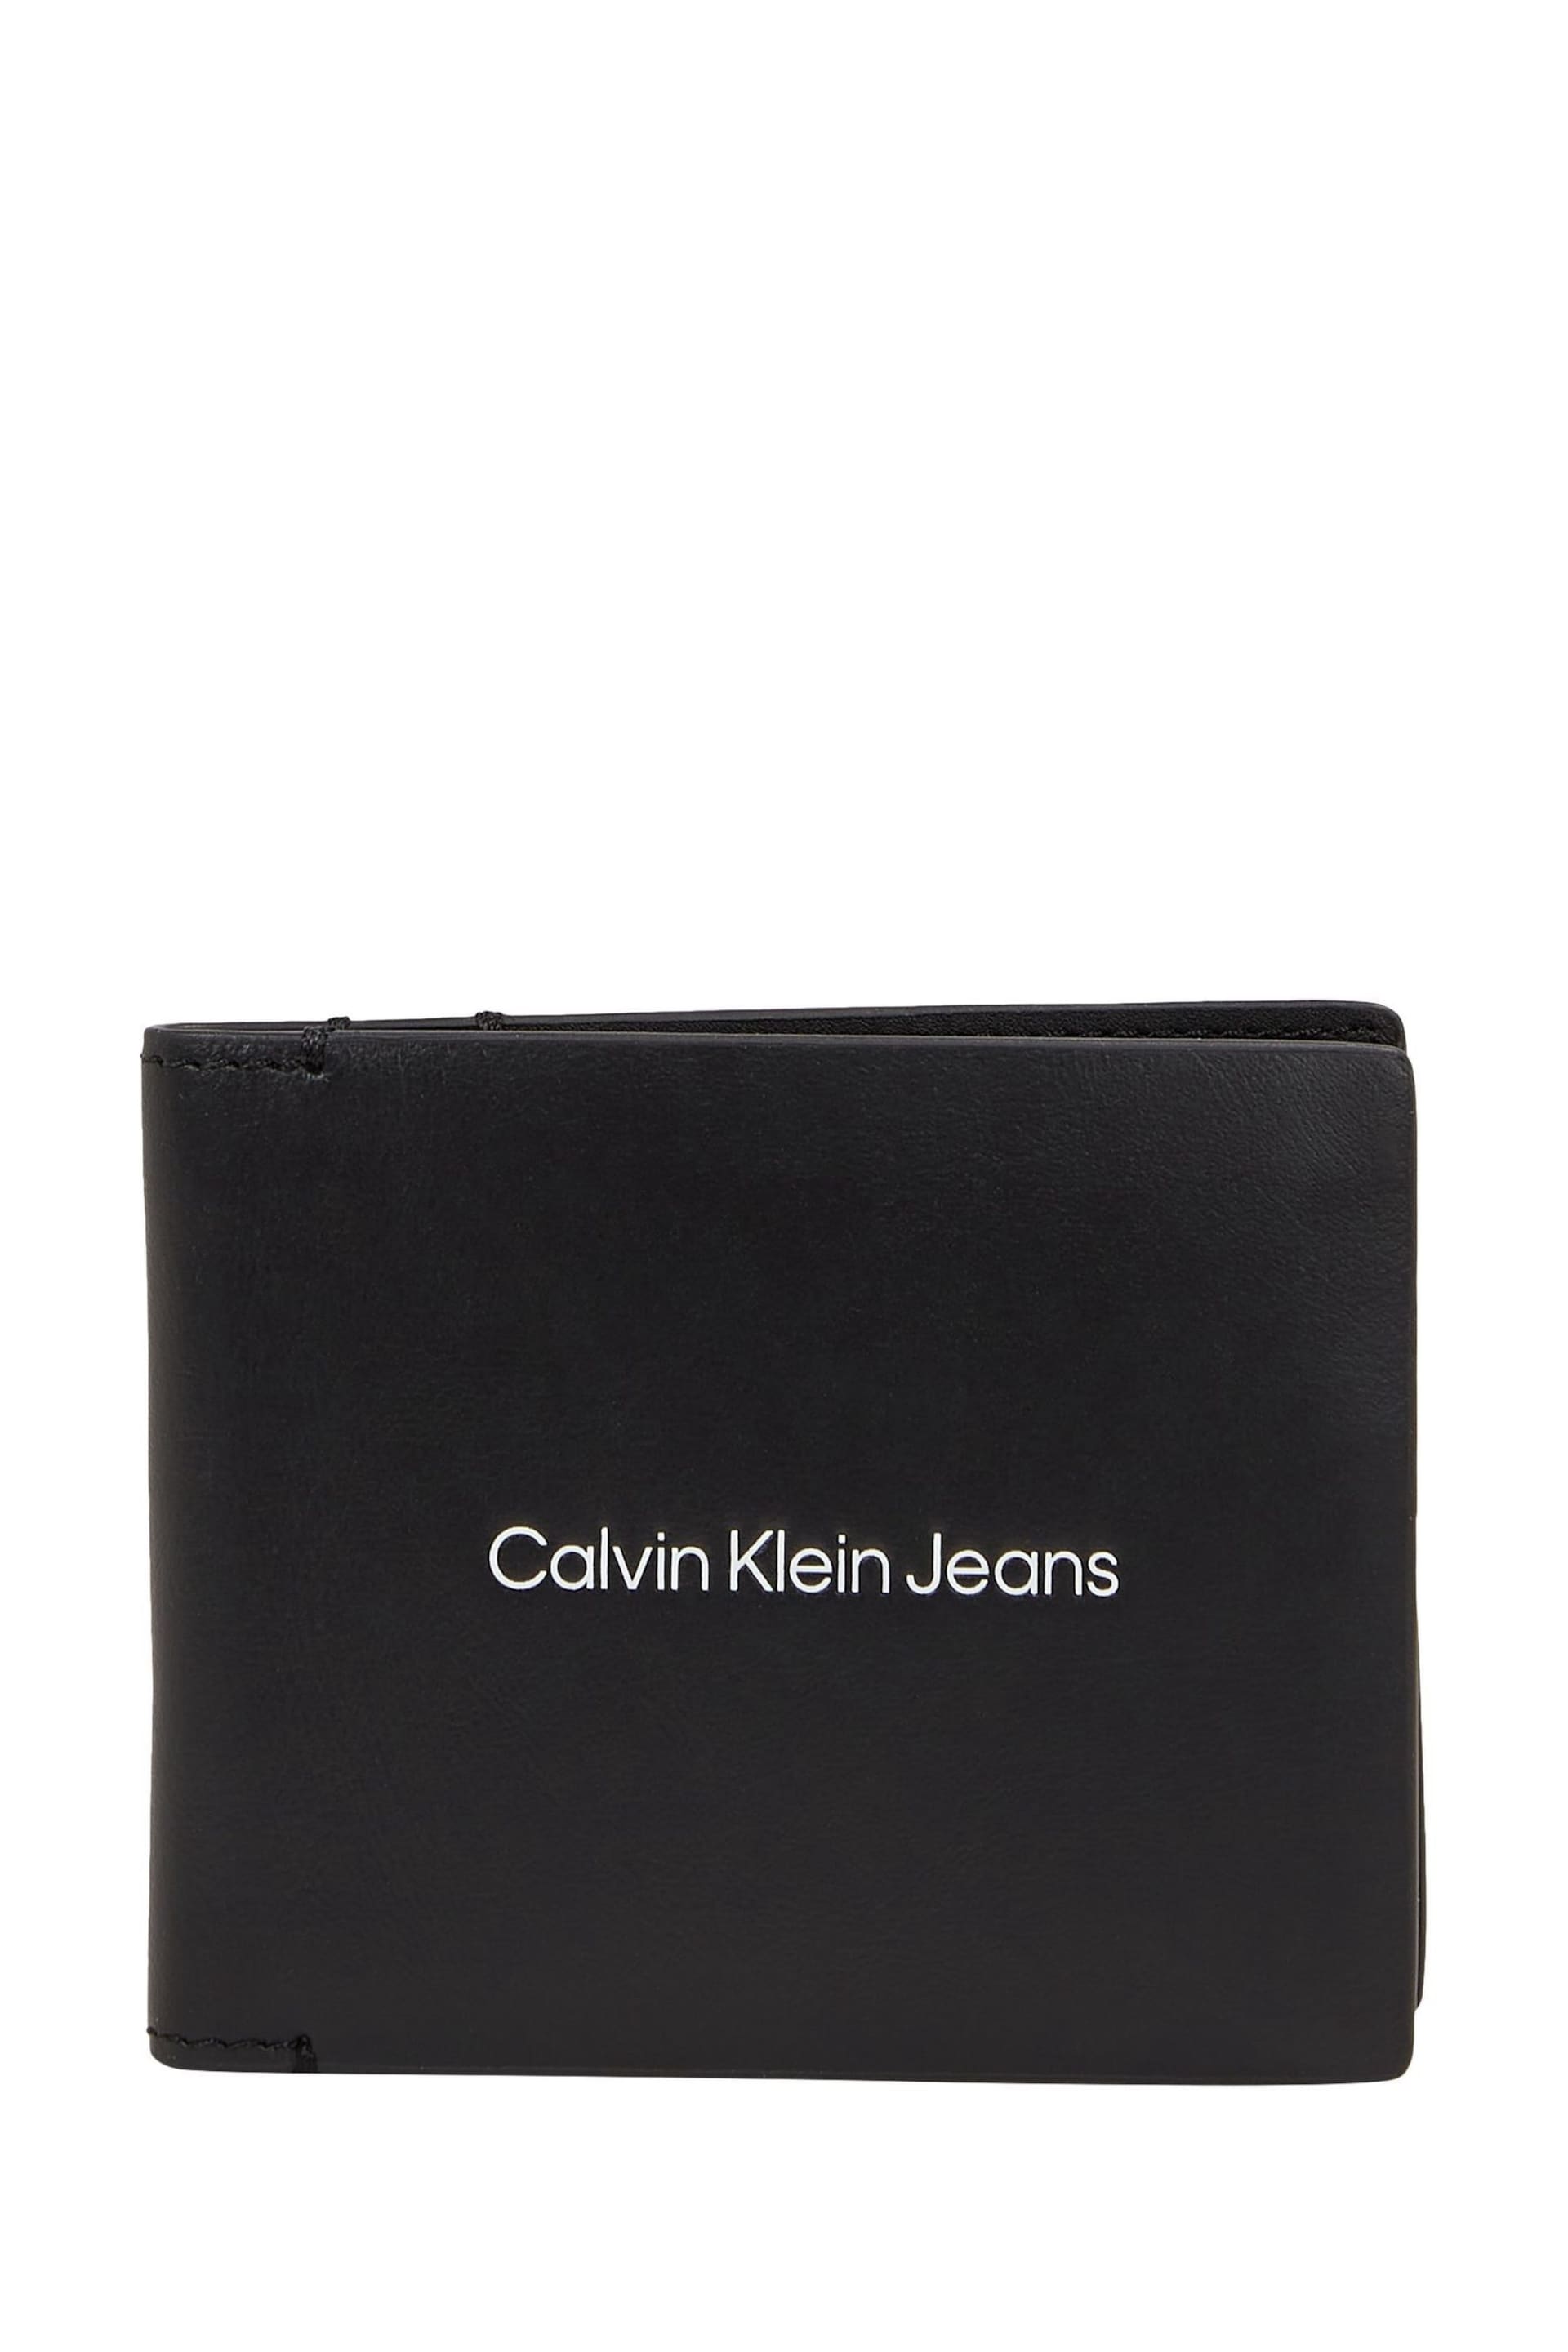 Calvin Klein Black Print Bifold Wallet - Image 1 of 2